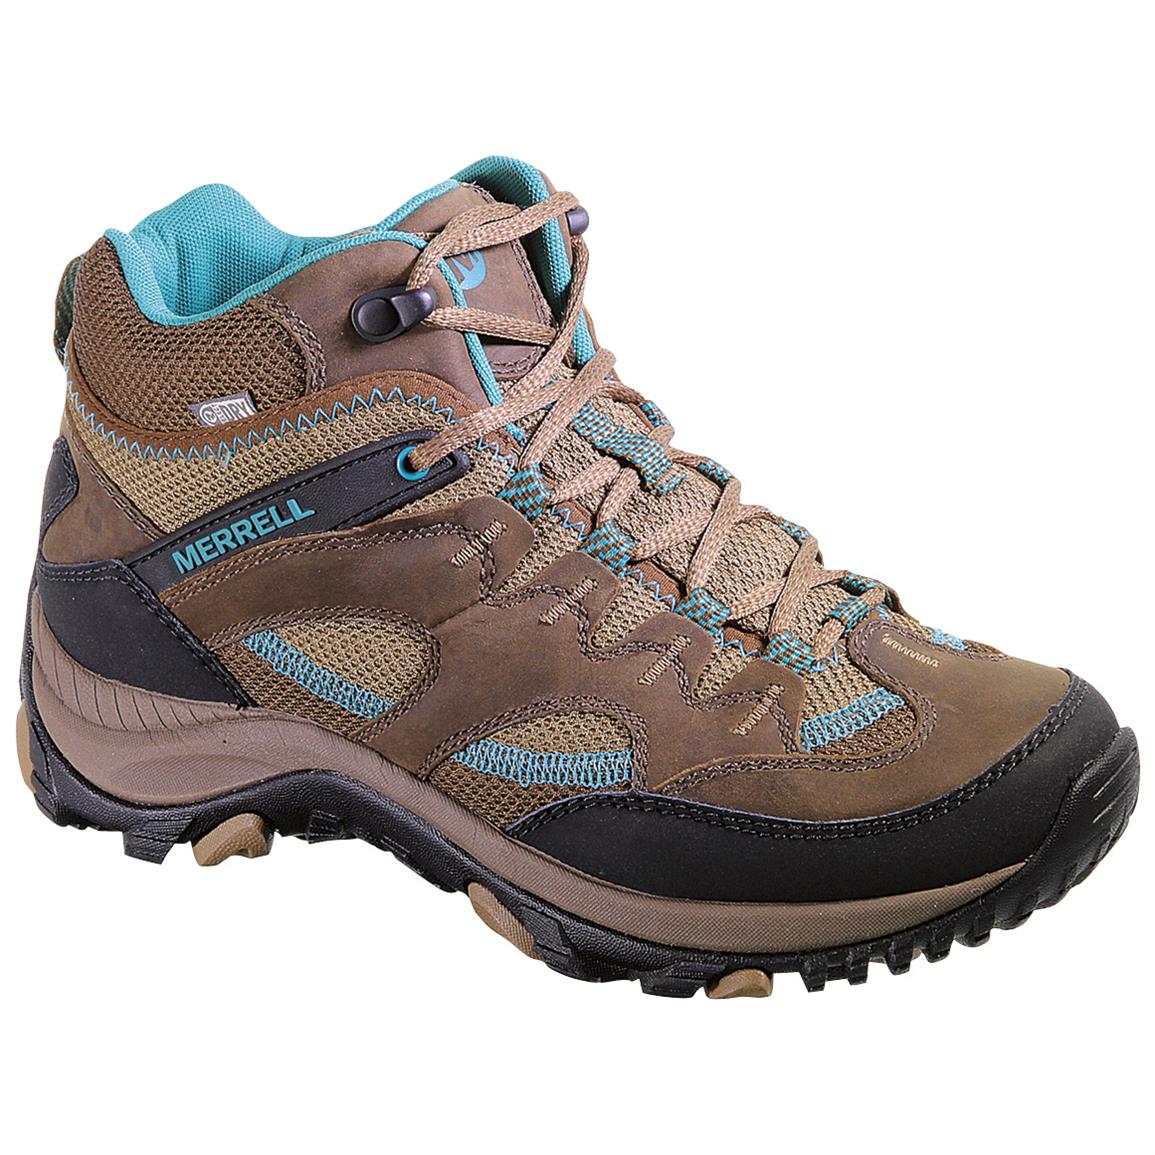 Women's Merrell Salida Mid Waterproof Hiking Boots - 617460, Hiking